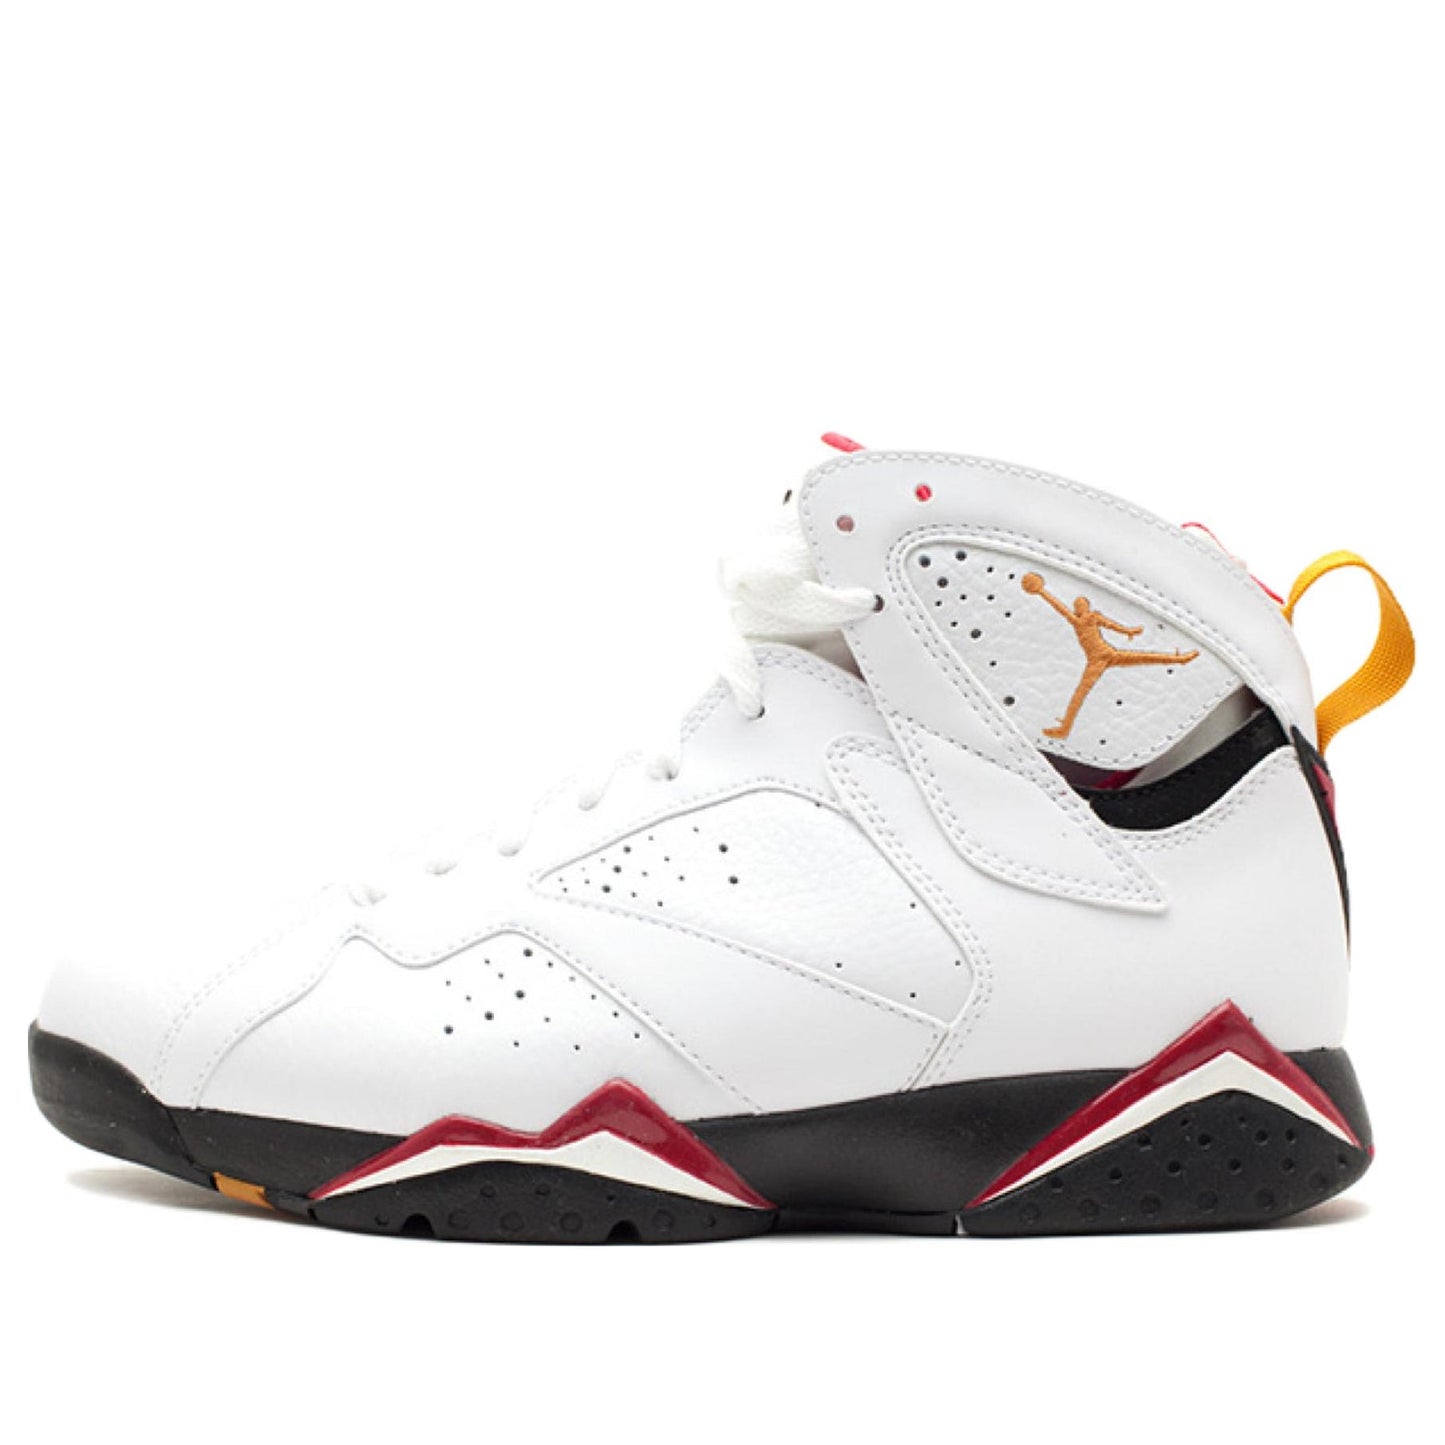 Air Jordan 7 Retro 'Cardinal' 2011  304775-104 Vintage Sportswear